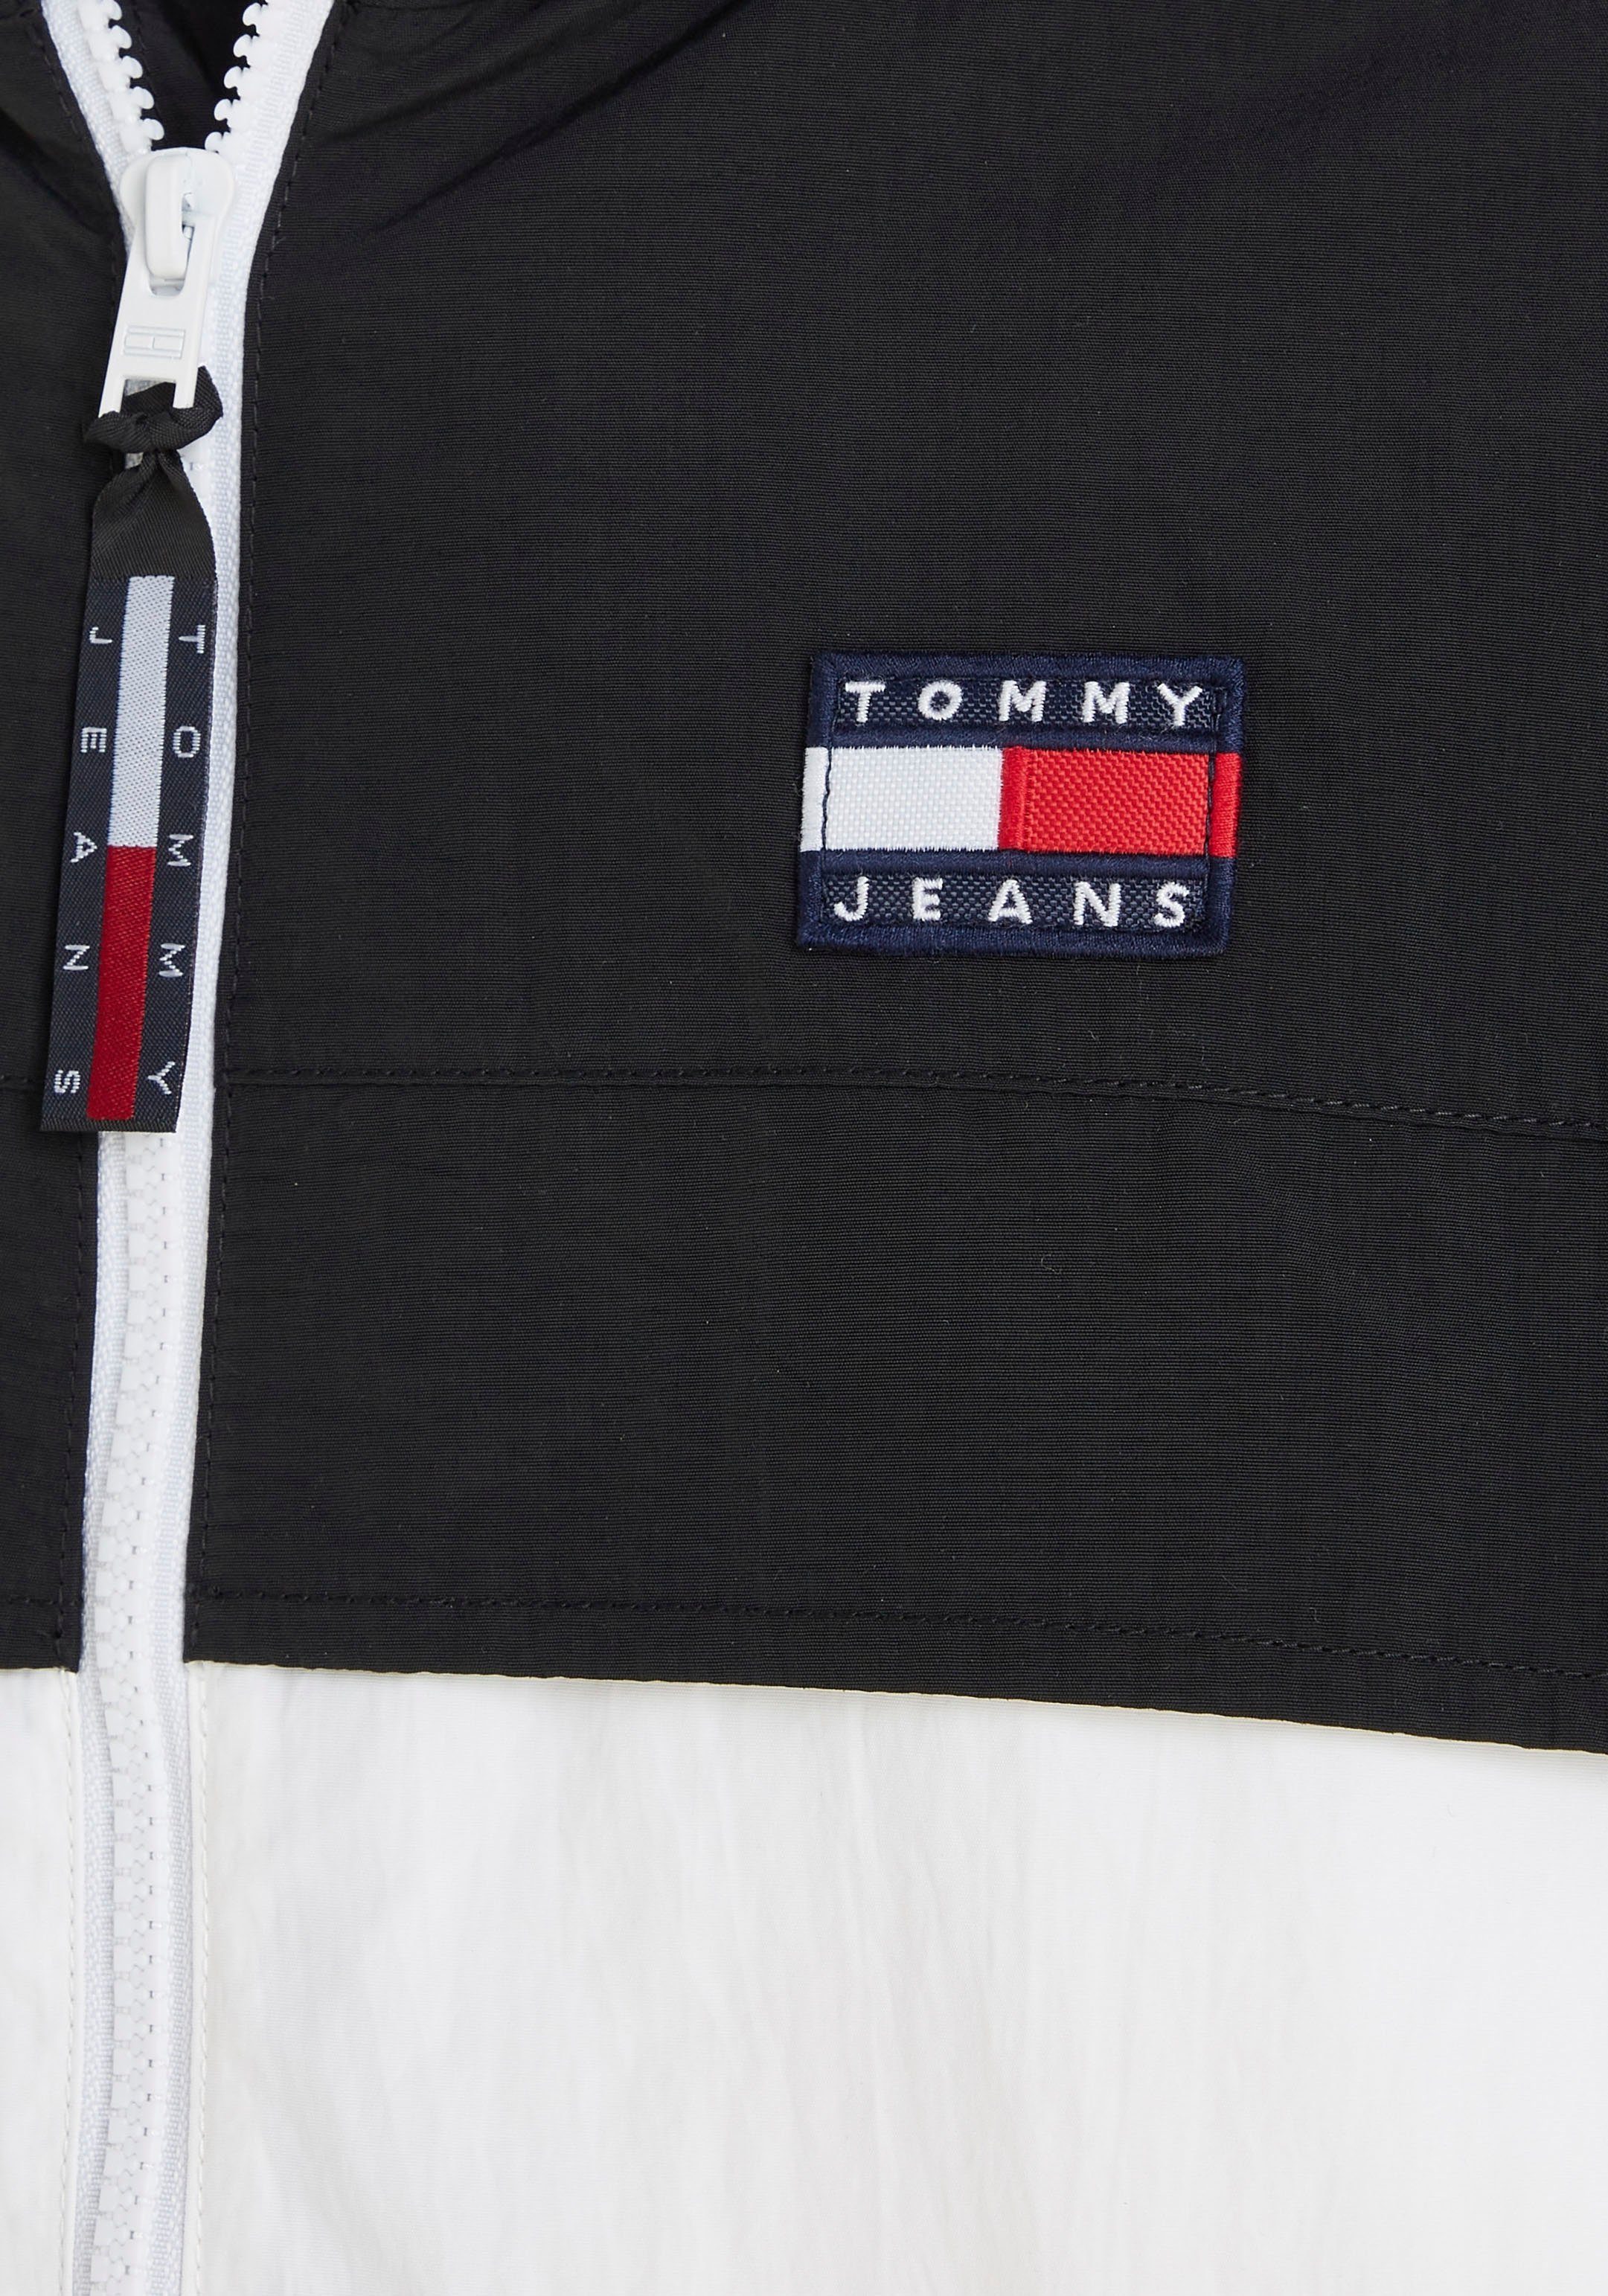 Design WINDBREAKER Tommy im CHICAGO Black/DeepCrimson/White Jeans CLBK colorblocking Windbreaker TJM